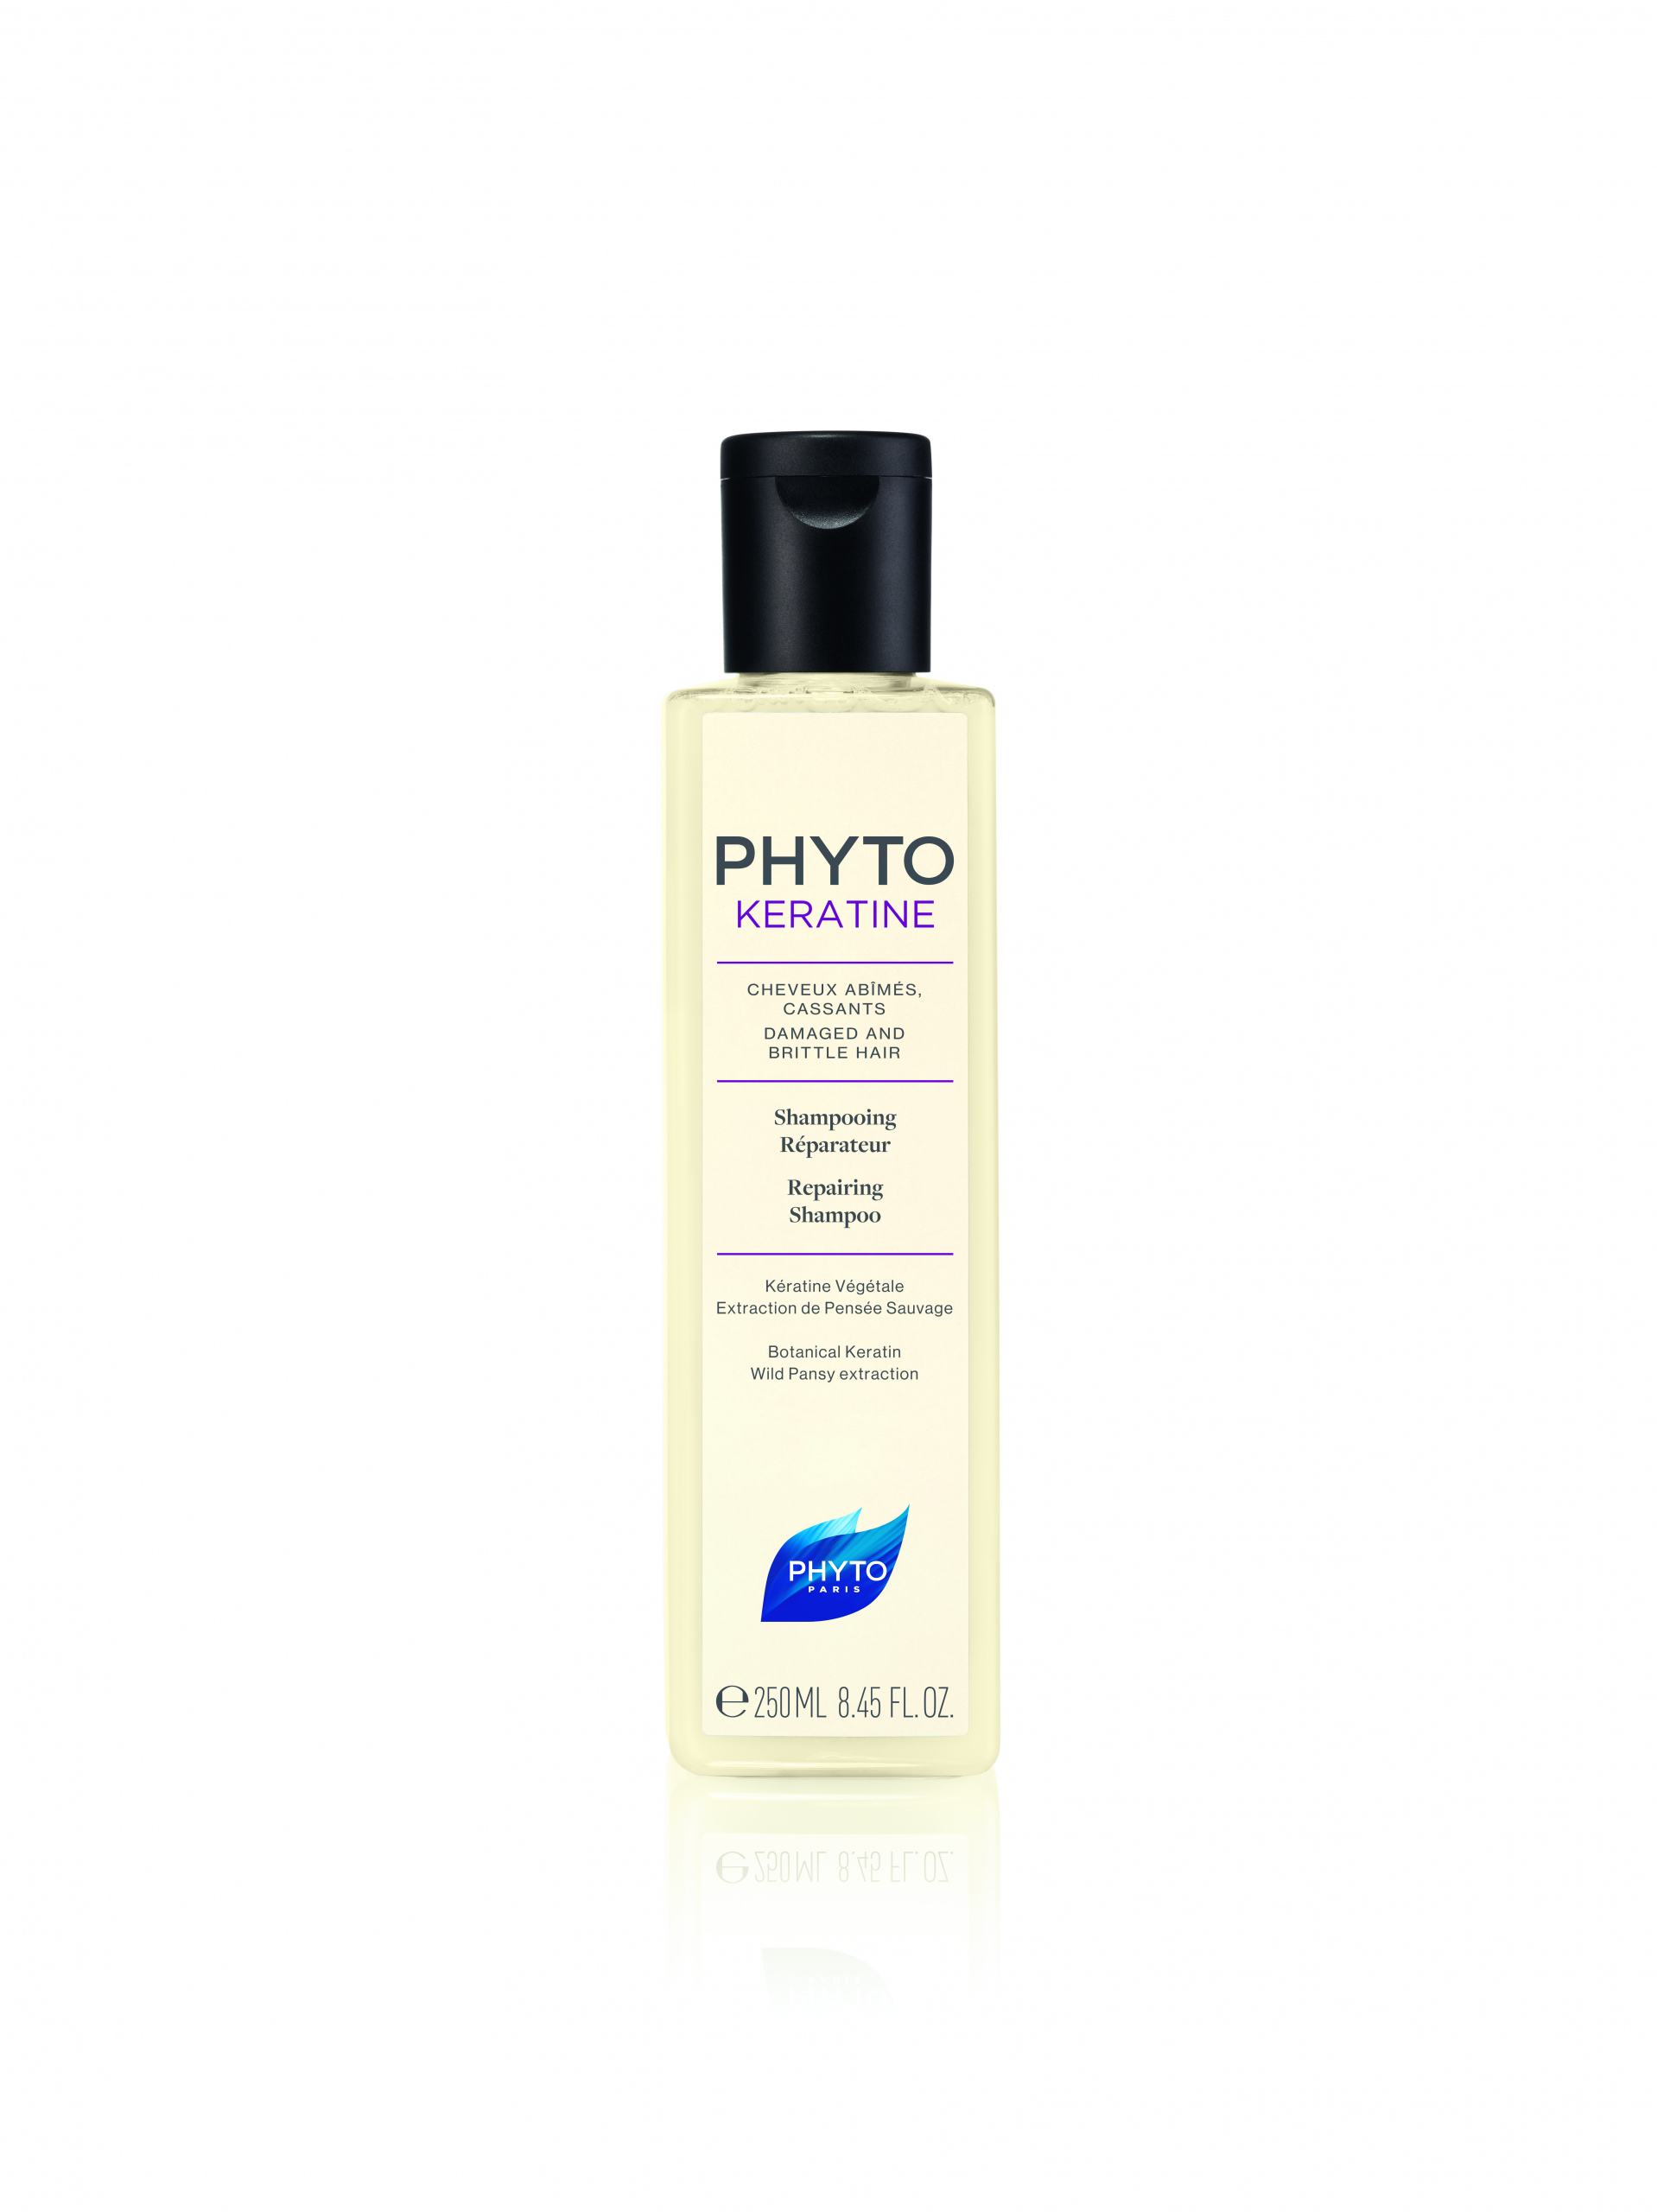 phytokeratine extreme szampon skład